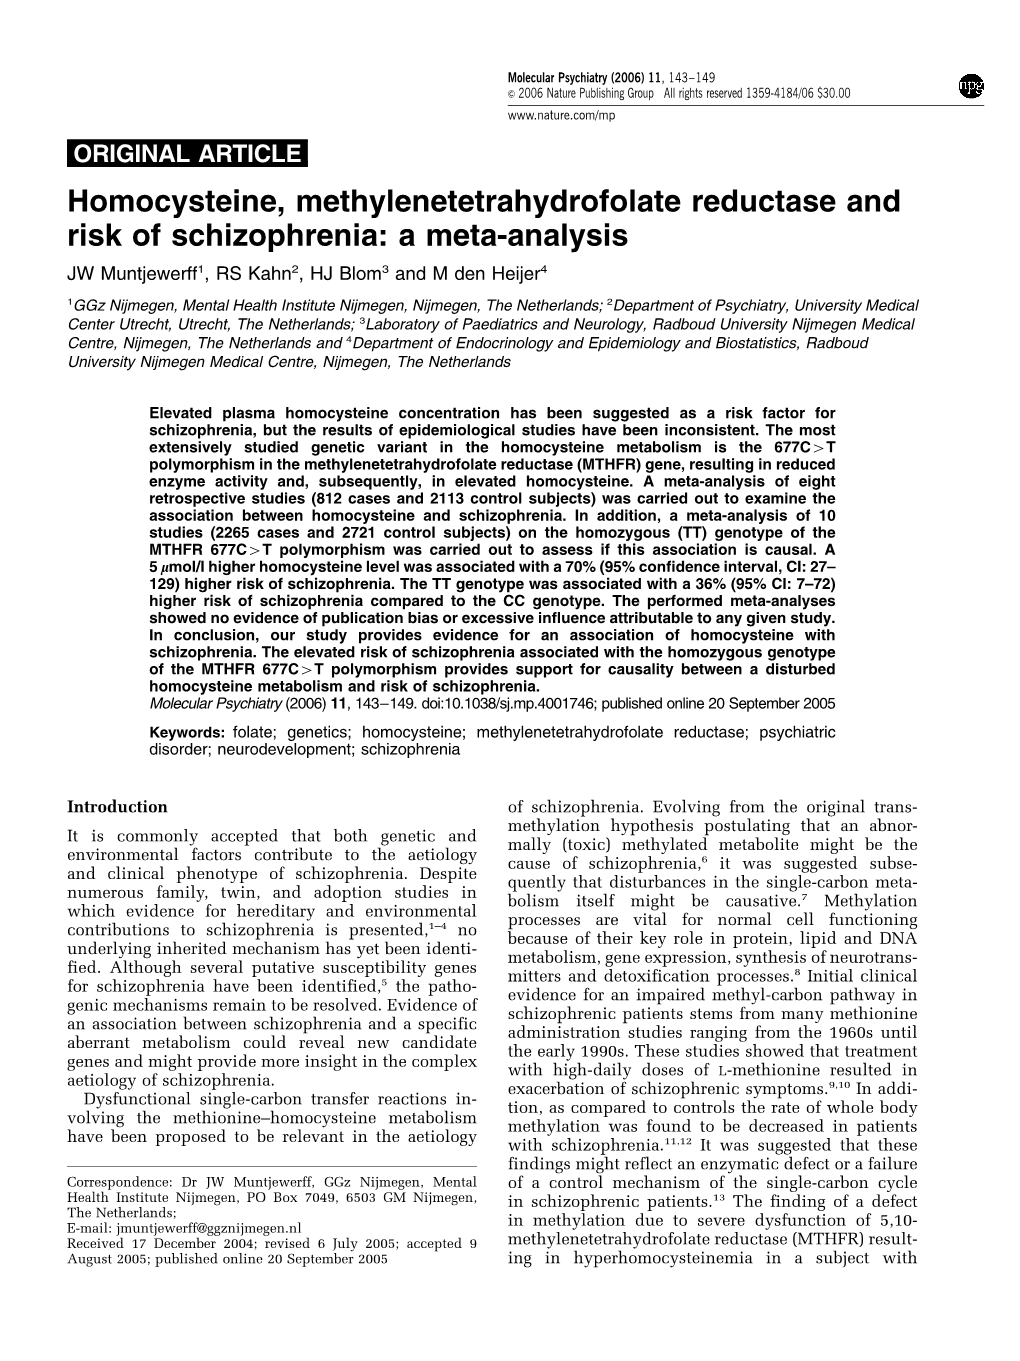 Homocysteine, Methylenetetrahydrofolate Reductase and Risk of Schizophrenia